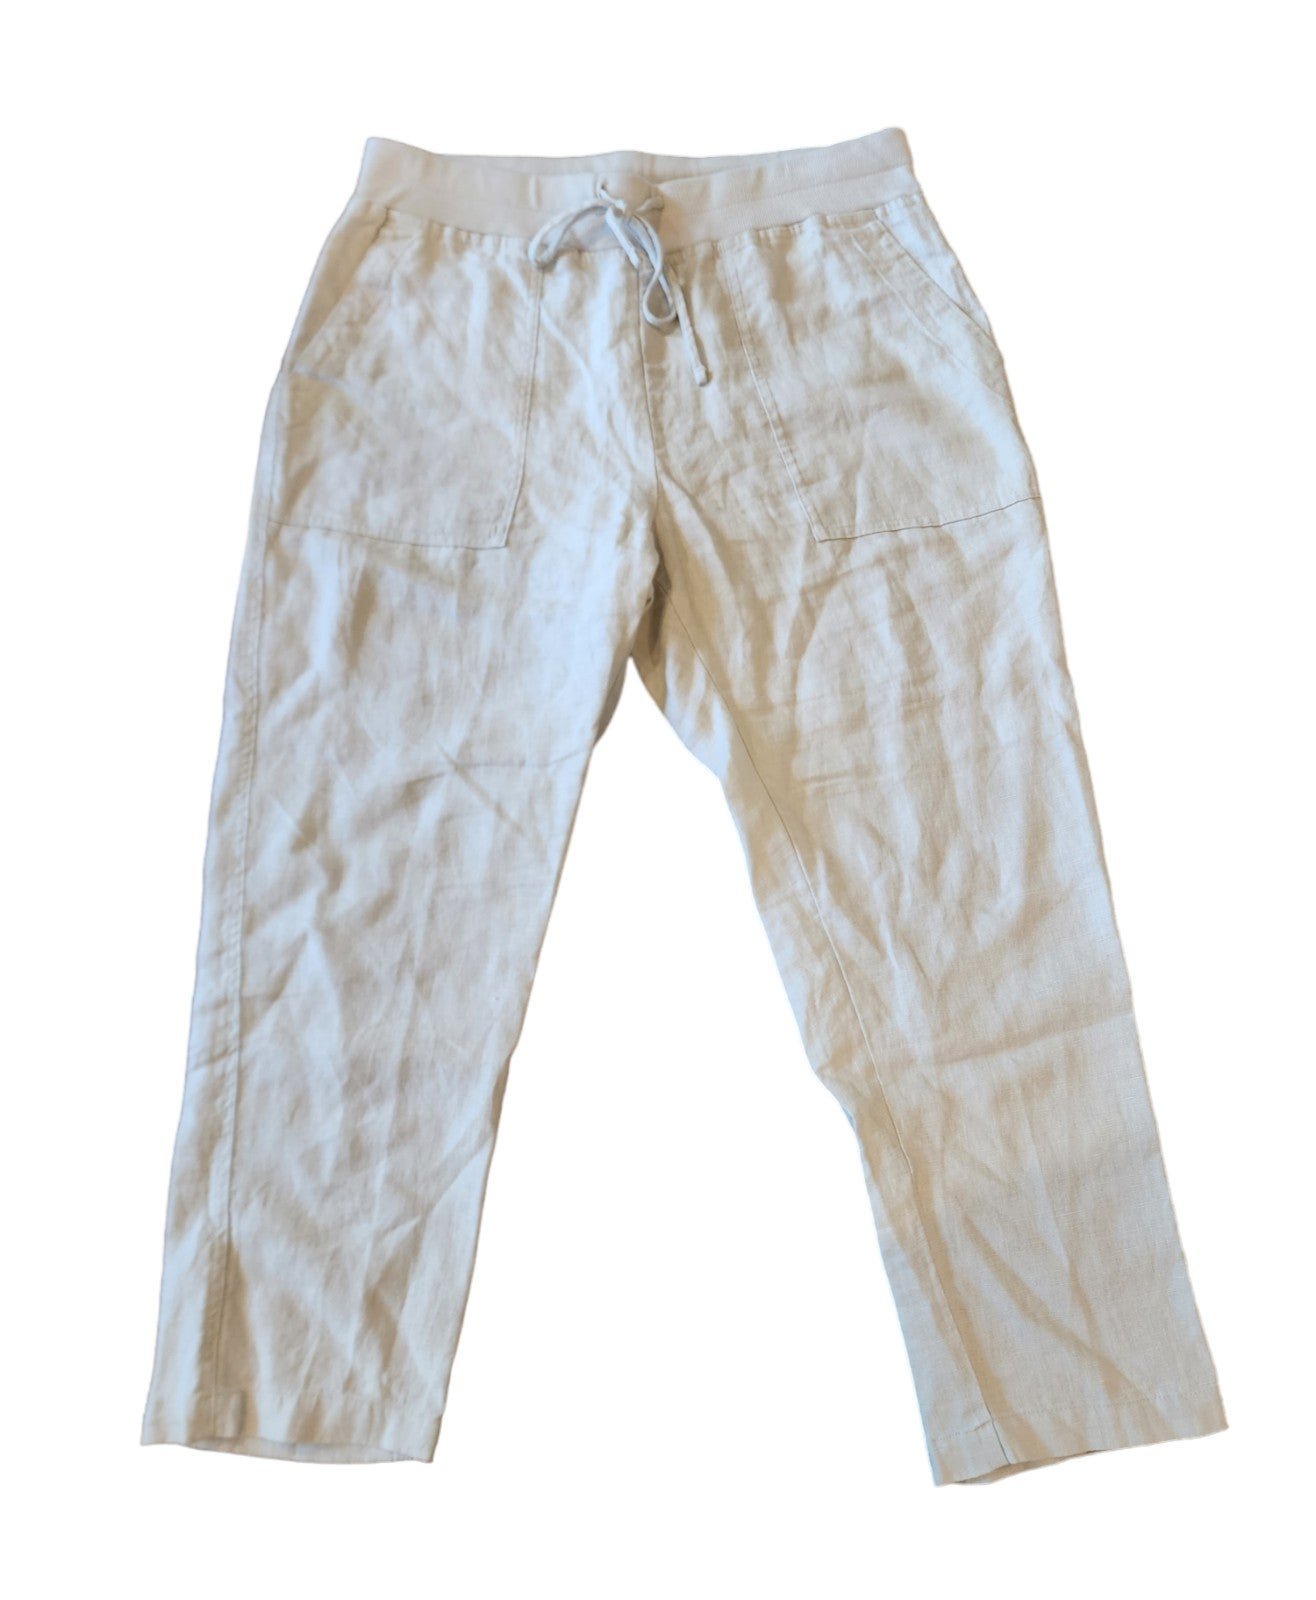 good price James Perse 100% Linen Lightweight Tan Drawstring Waist Pants Women´s Size 3 p6lqIyQ1C Outlet Store